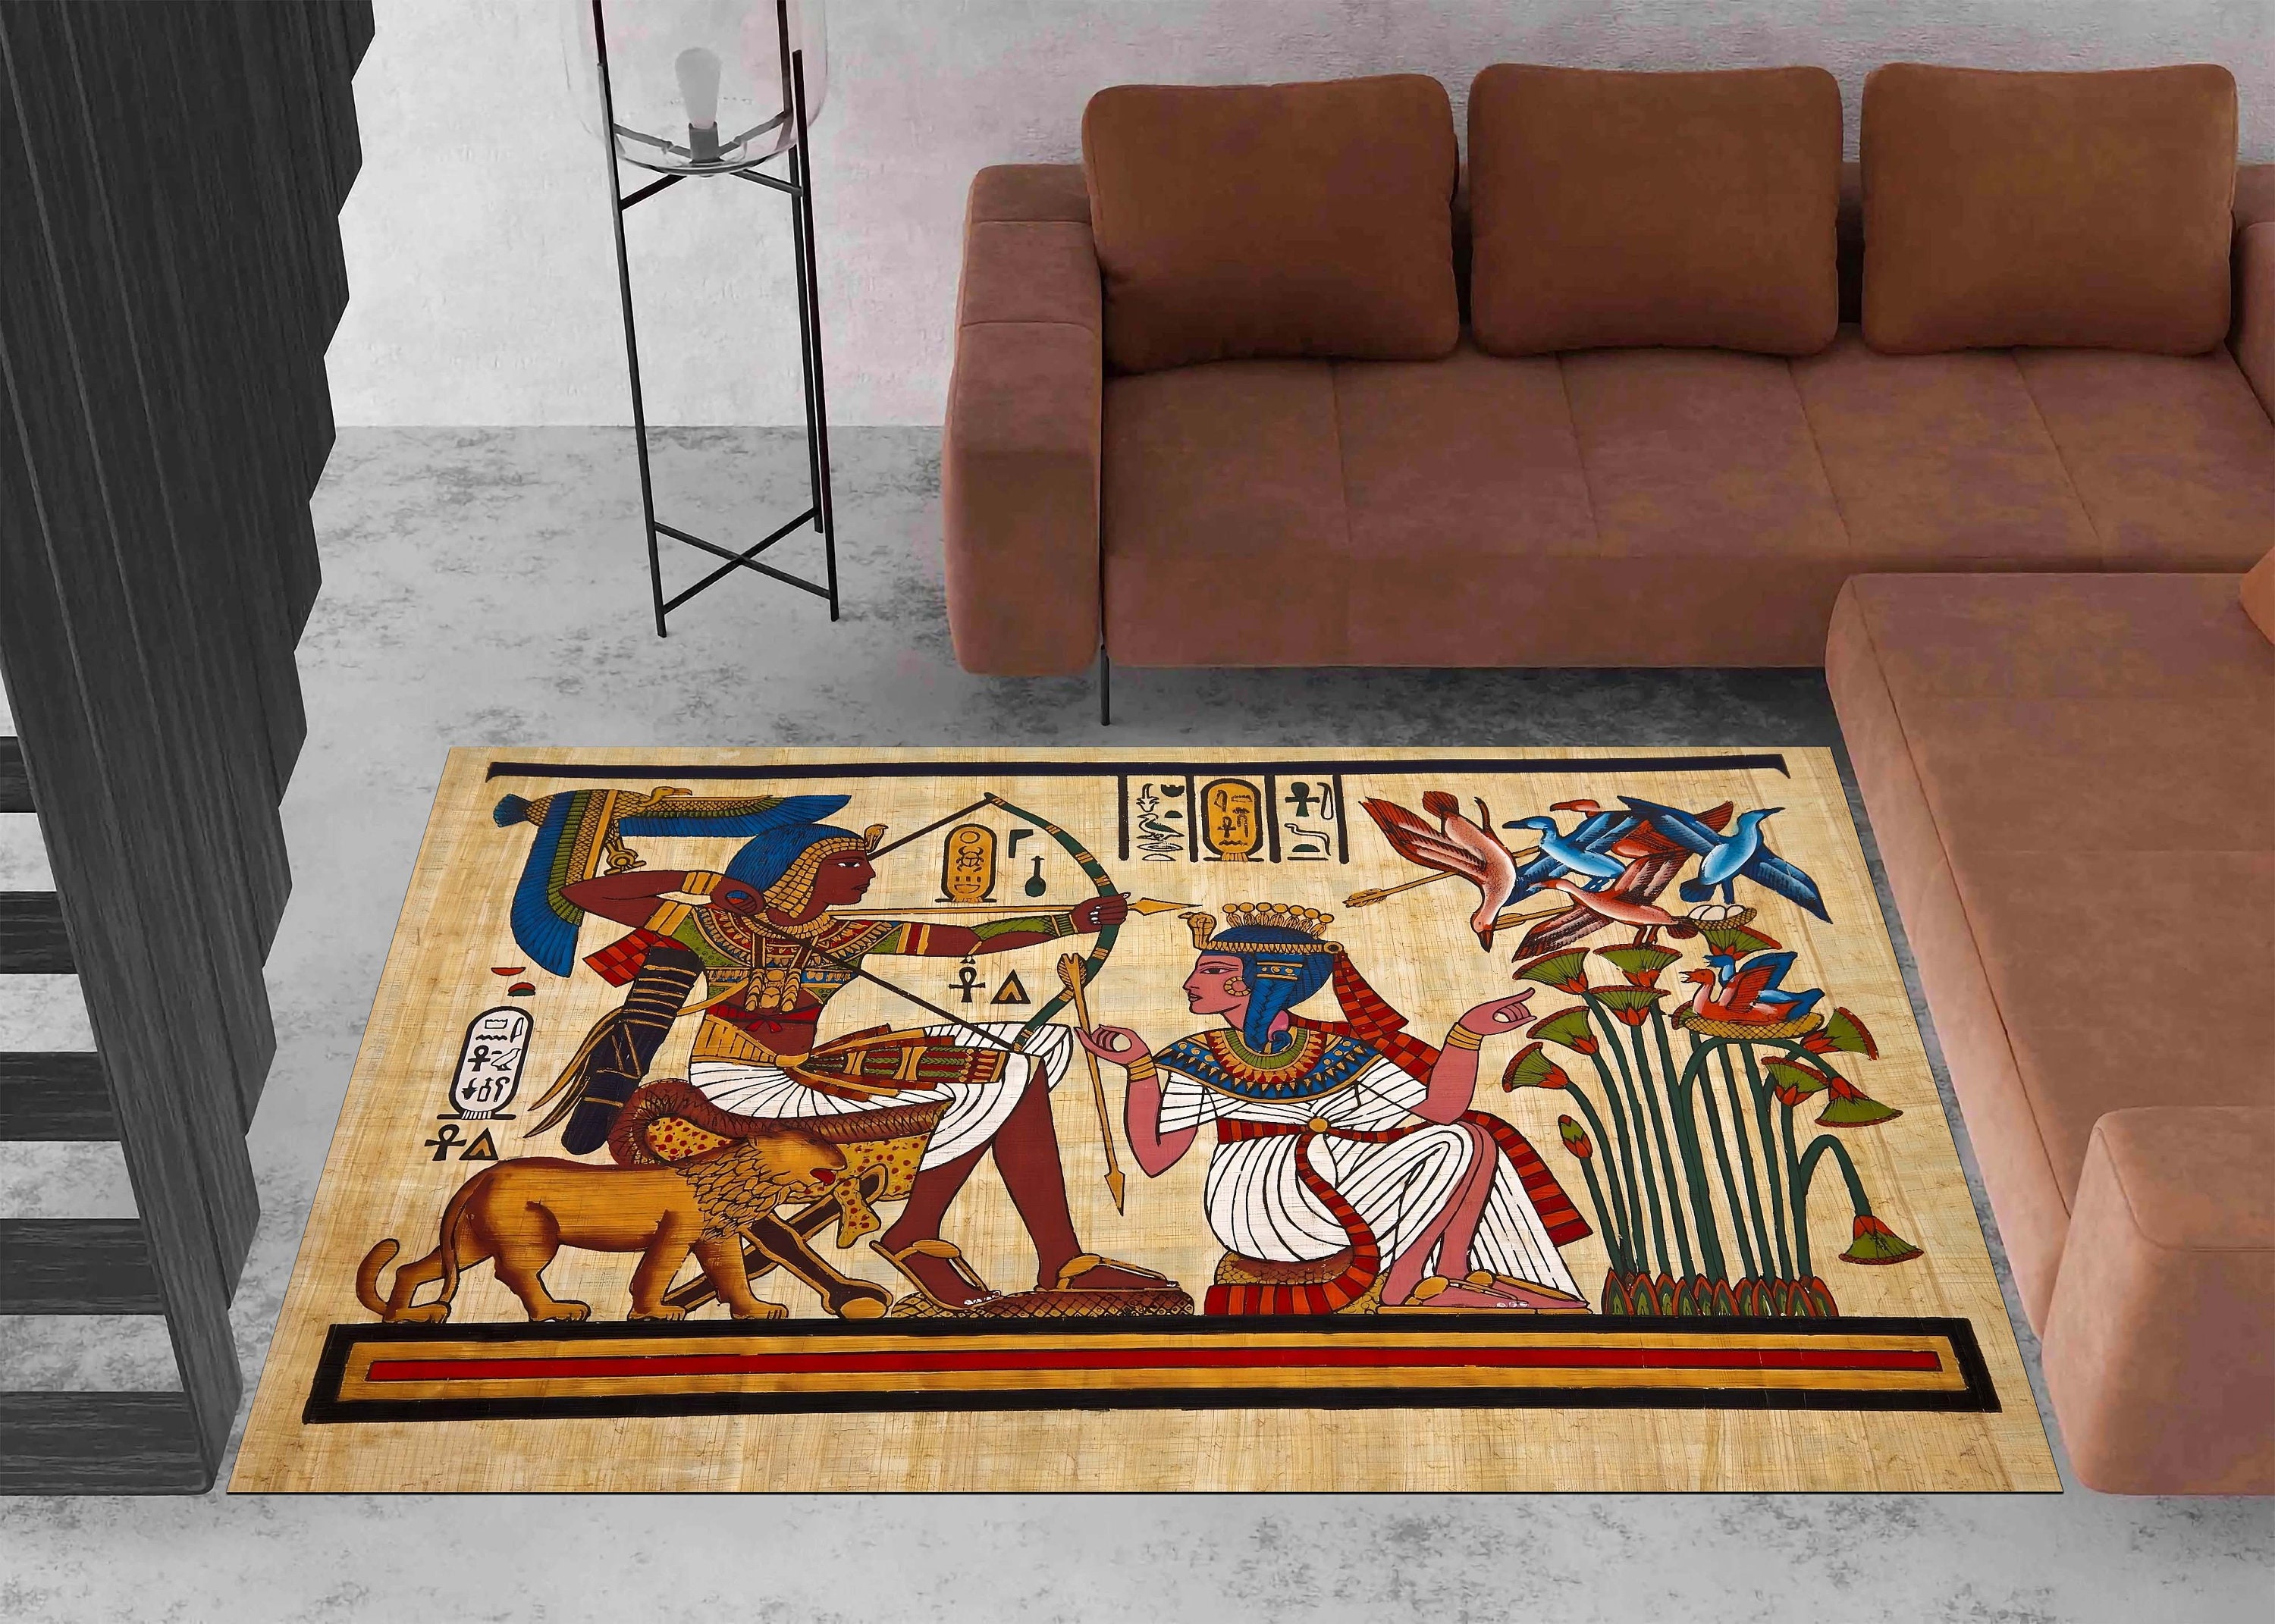 Egyptian Mural DIY Latch Hook Kits Rug Embroidery Carpet Set